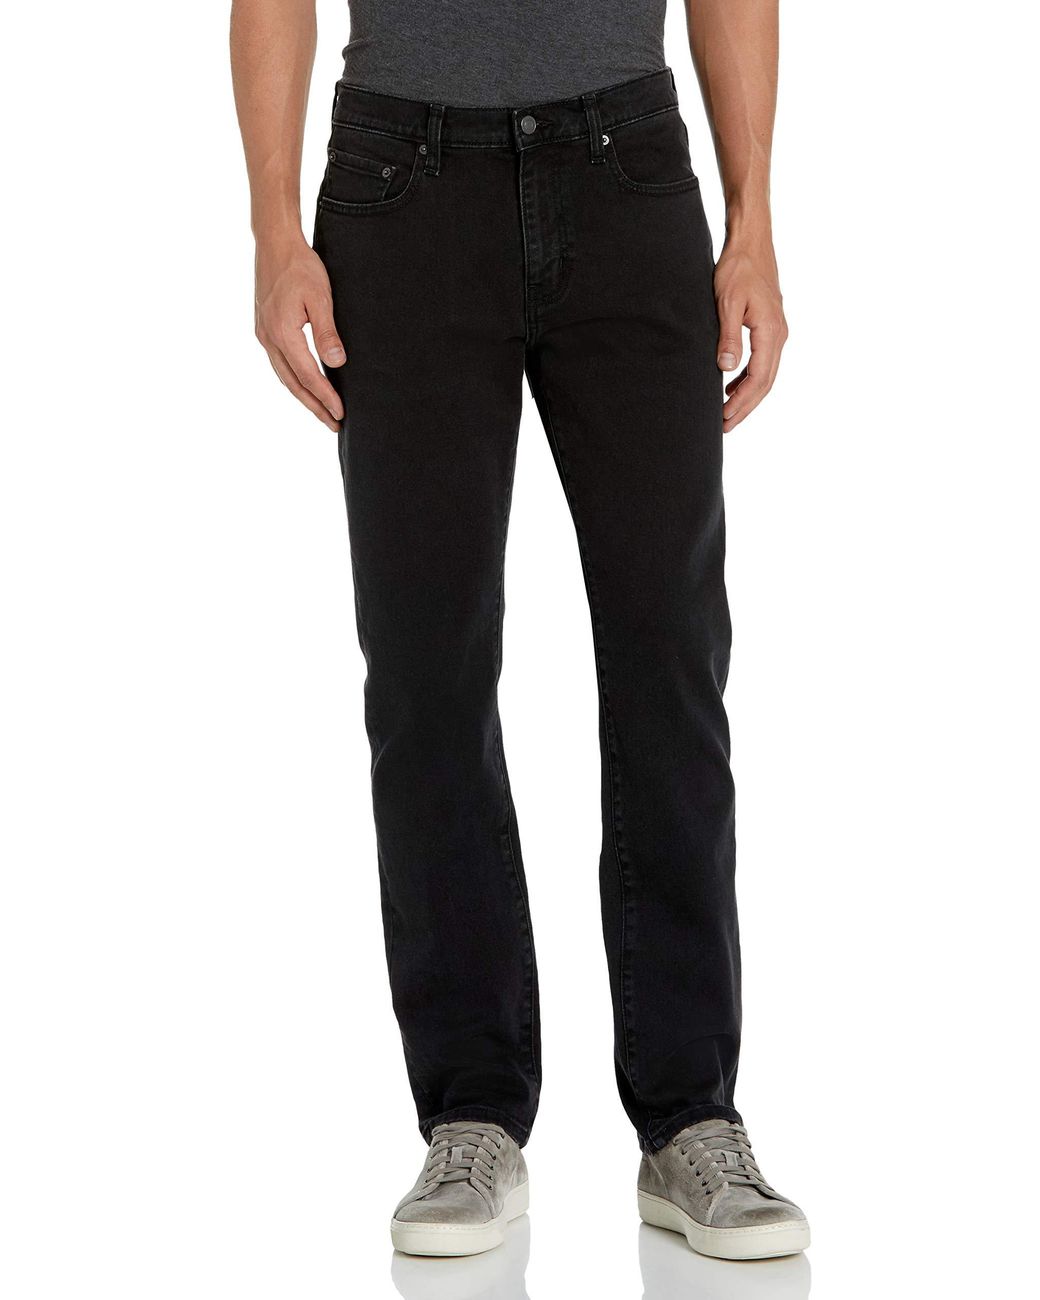 Amazon Essentials Denim Athletic-fit Stretch Jean in Washed Black ...